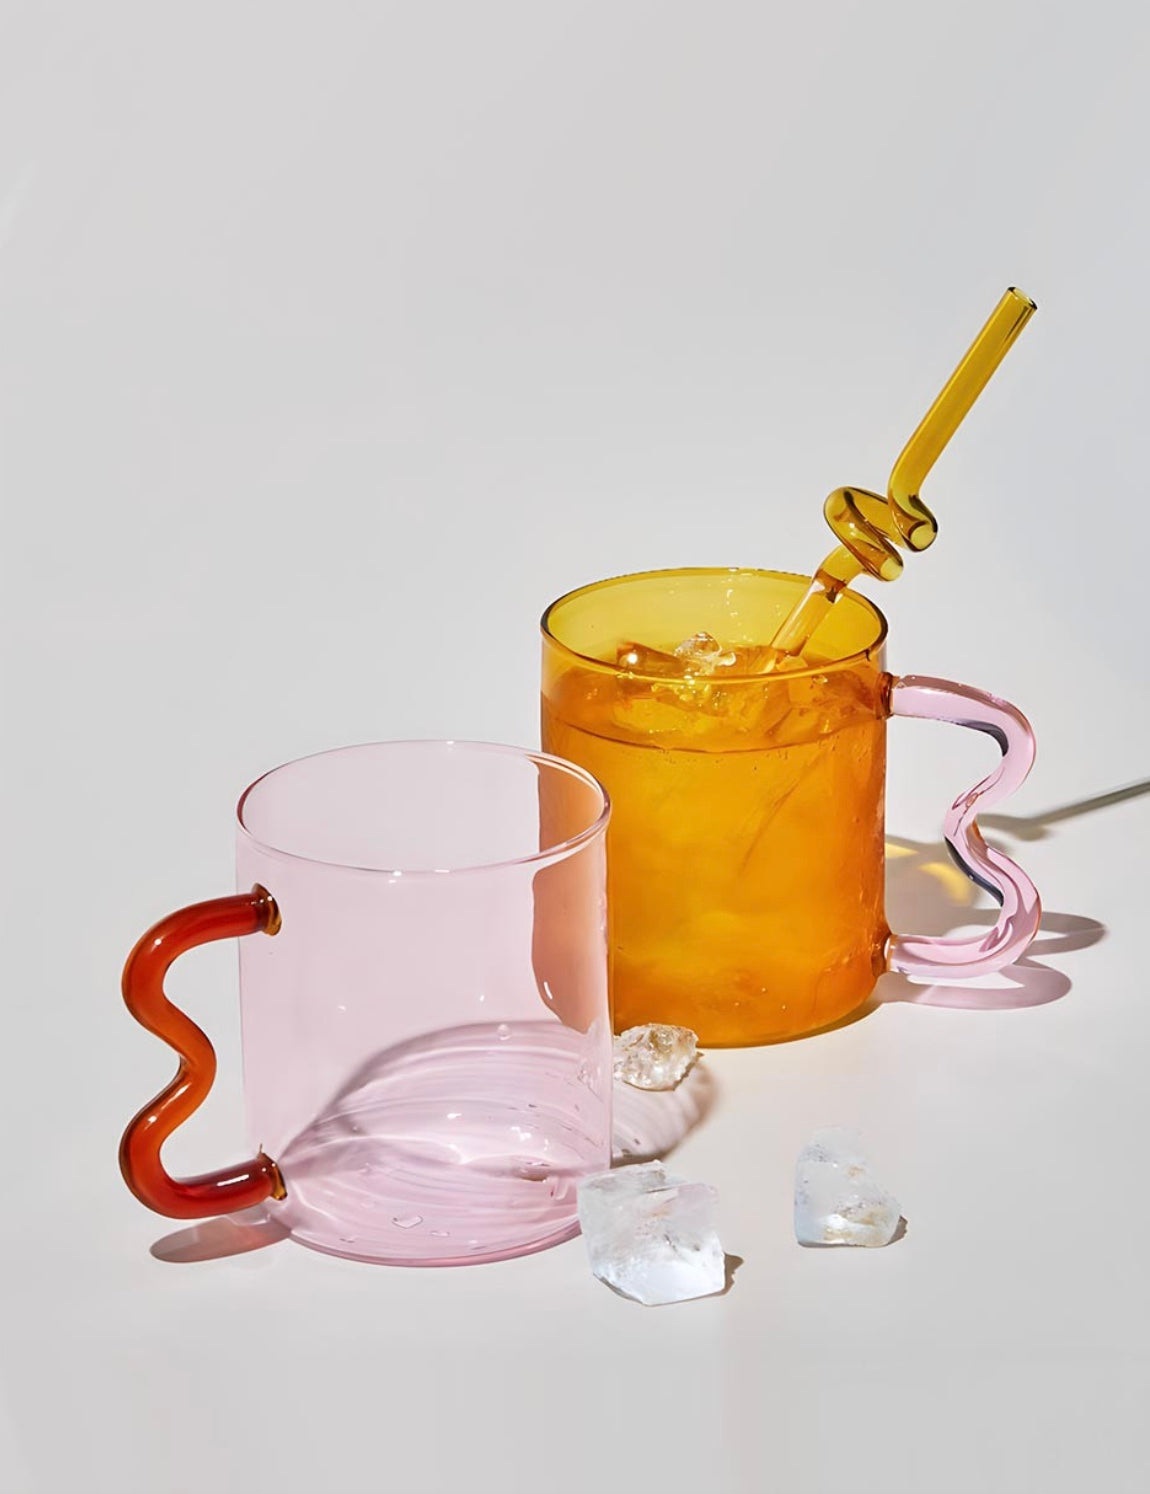 Colourful Glass Mug With Wavy Handle - "Bonbon" Pink & Amber